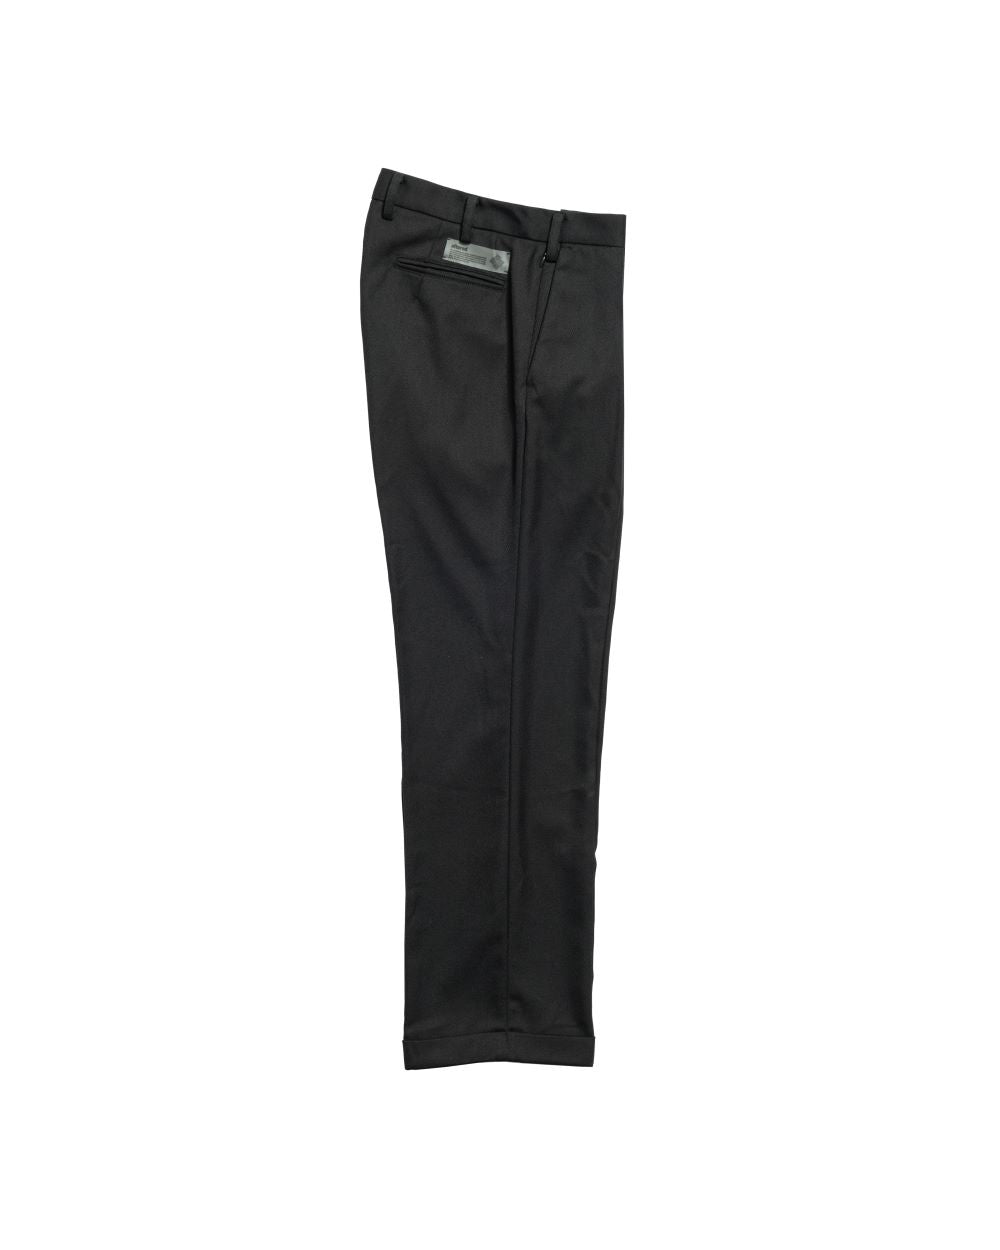 T/W Trousers[BLACK]